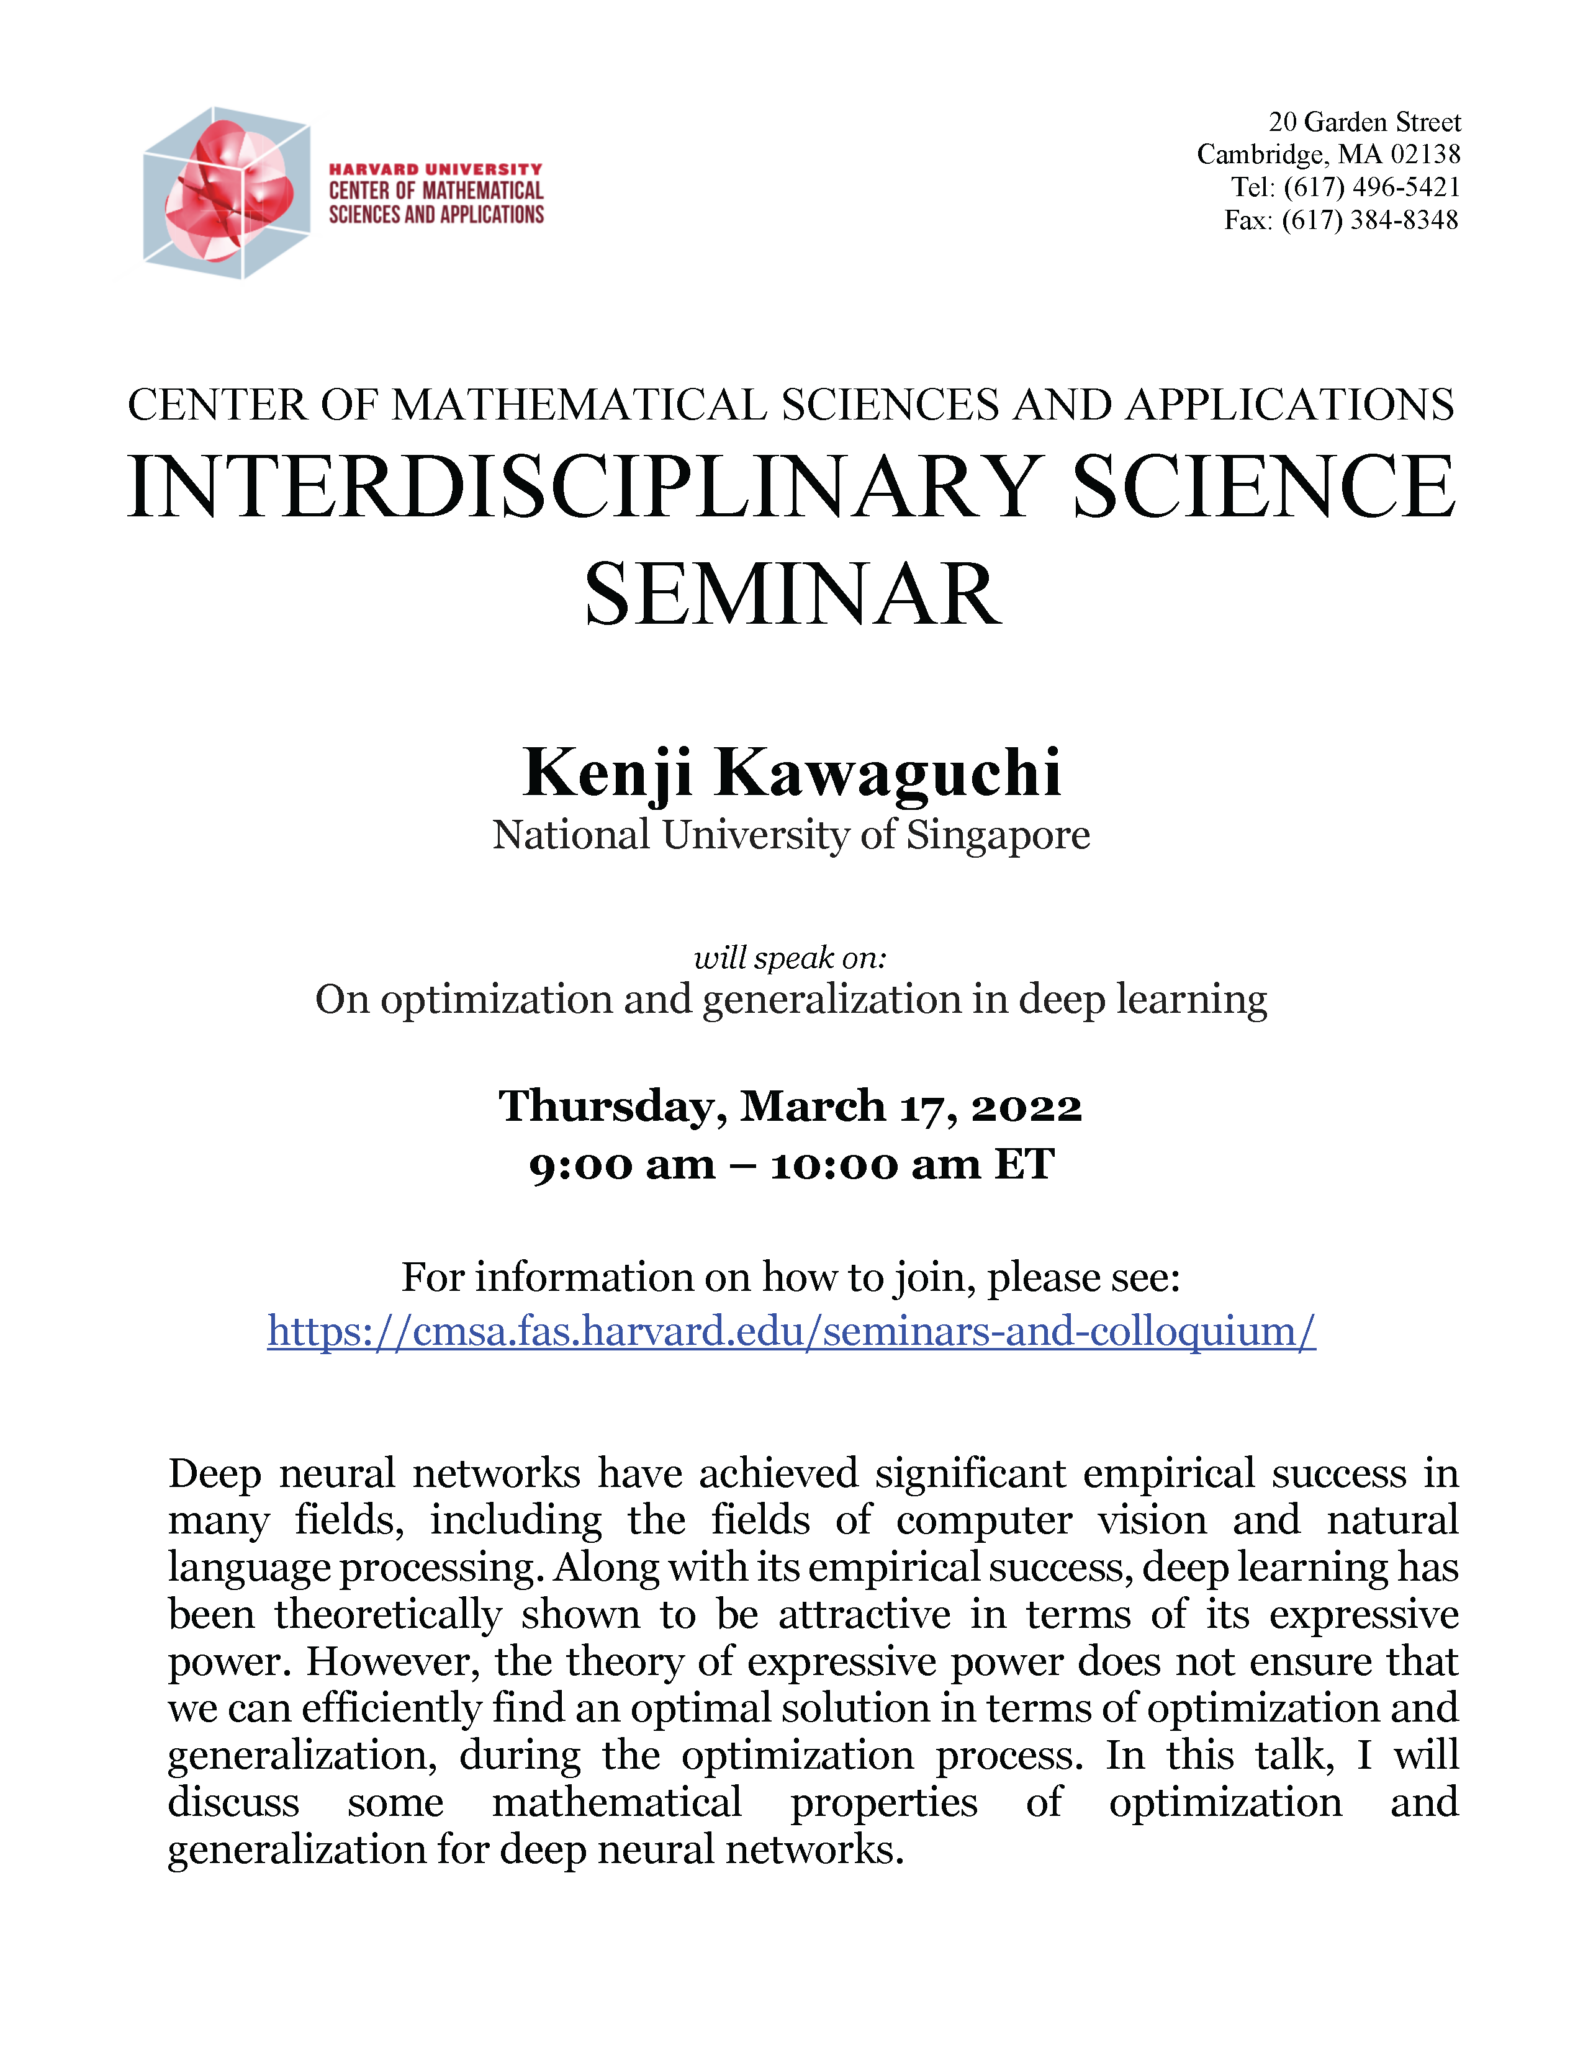 CMSA-Interdisciplinary-Science-Seminar-03.17.2022-1583x2048